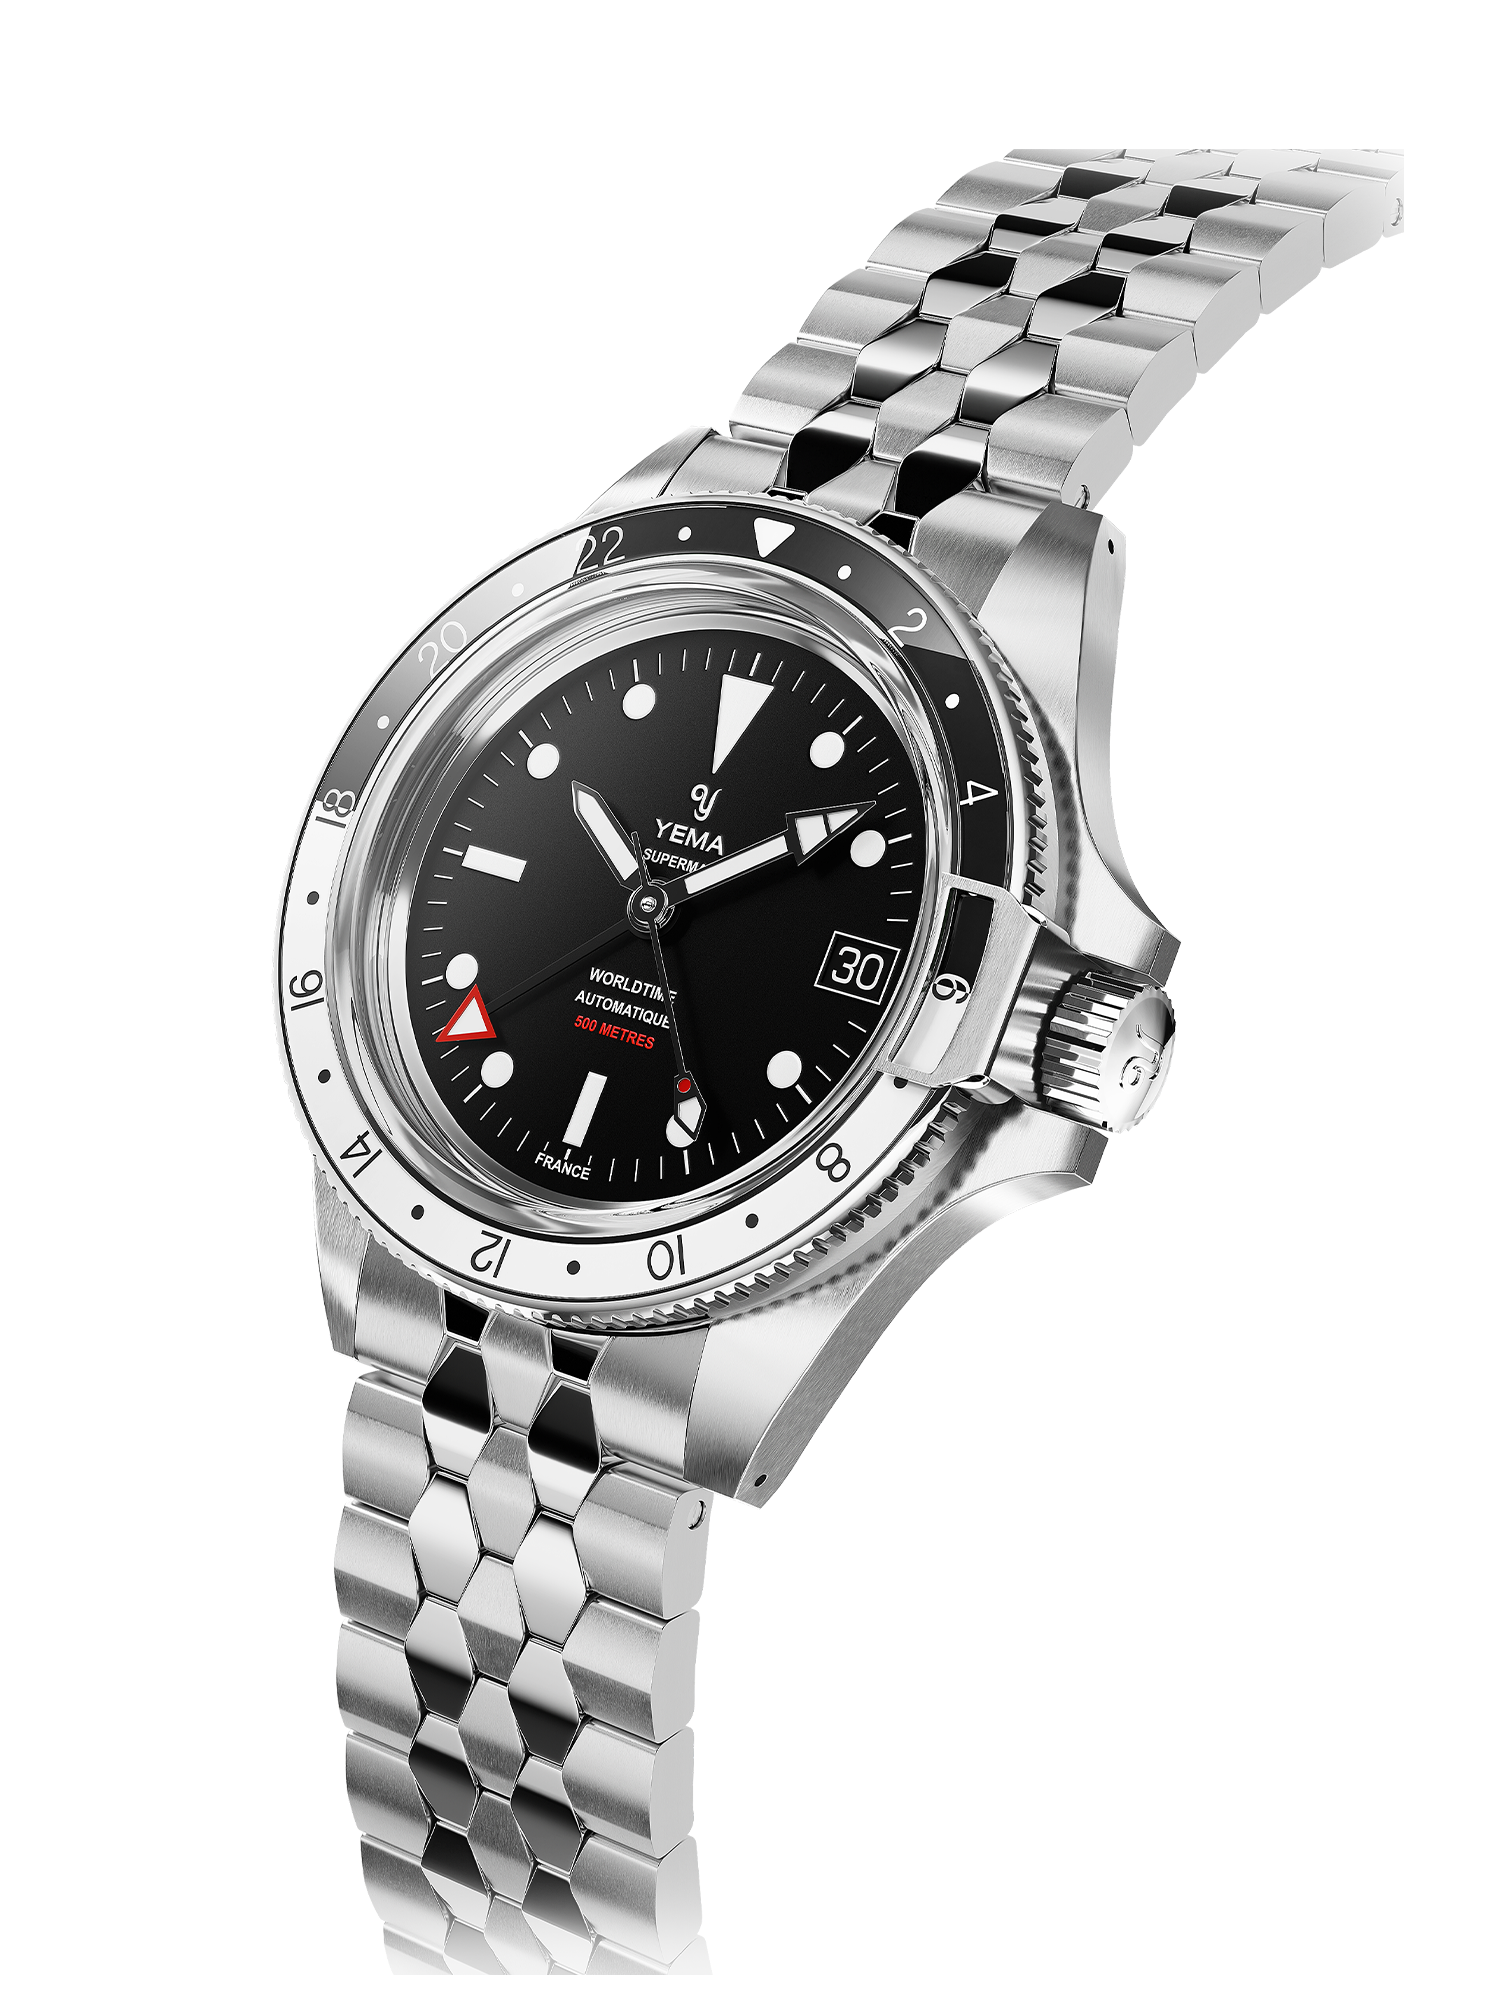 YEMA 腕時計 メンズ YGMT22A39-AMS スーパーマン500 GMT 自動巻き ブラックxシルバー アナログ表示